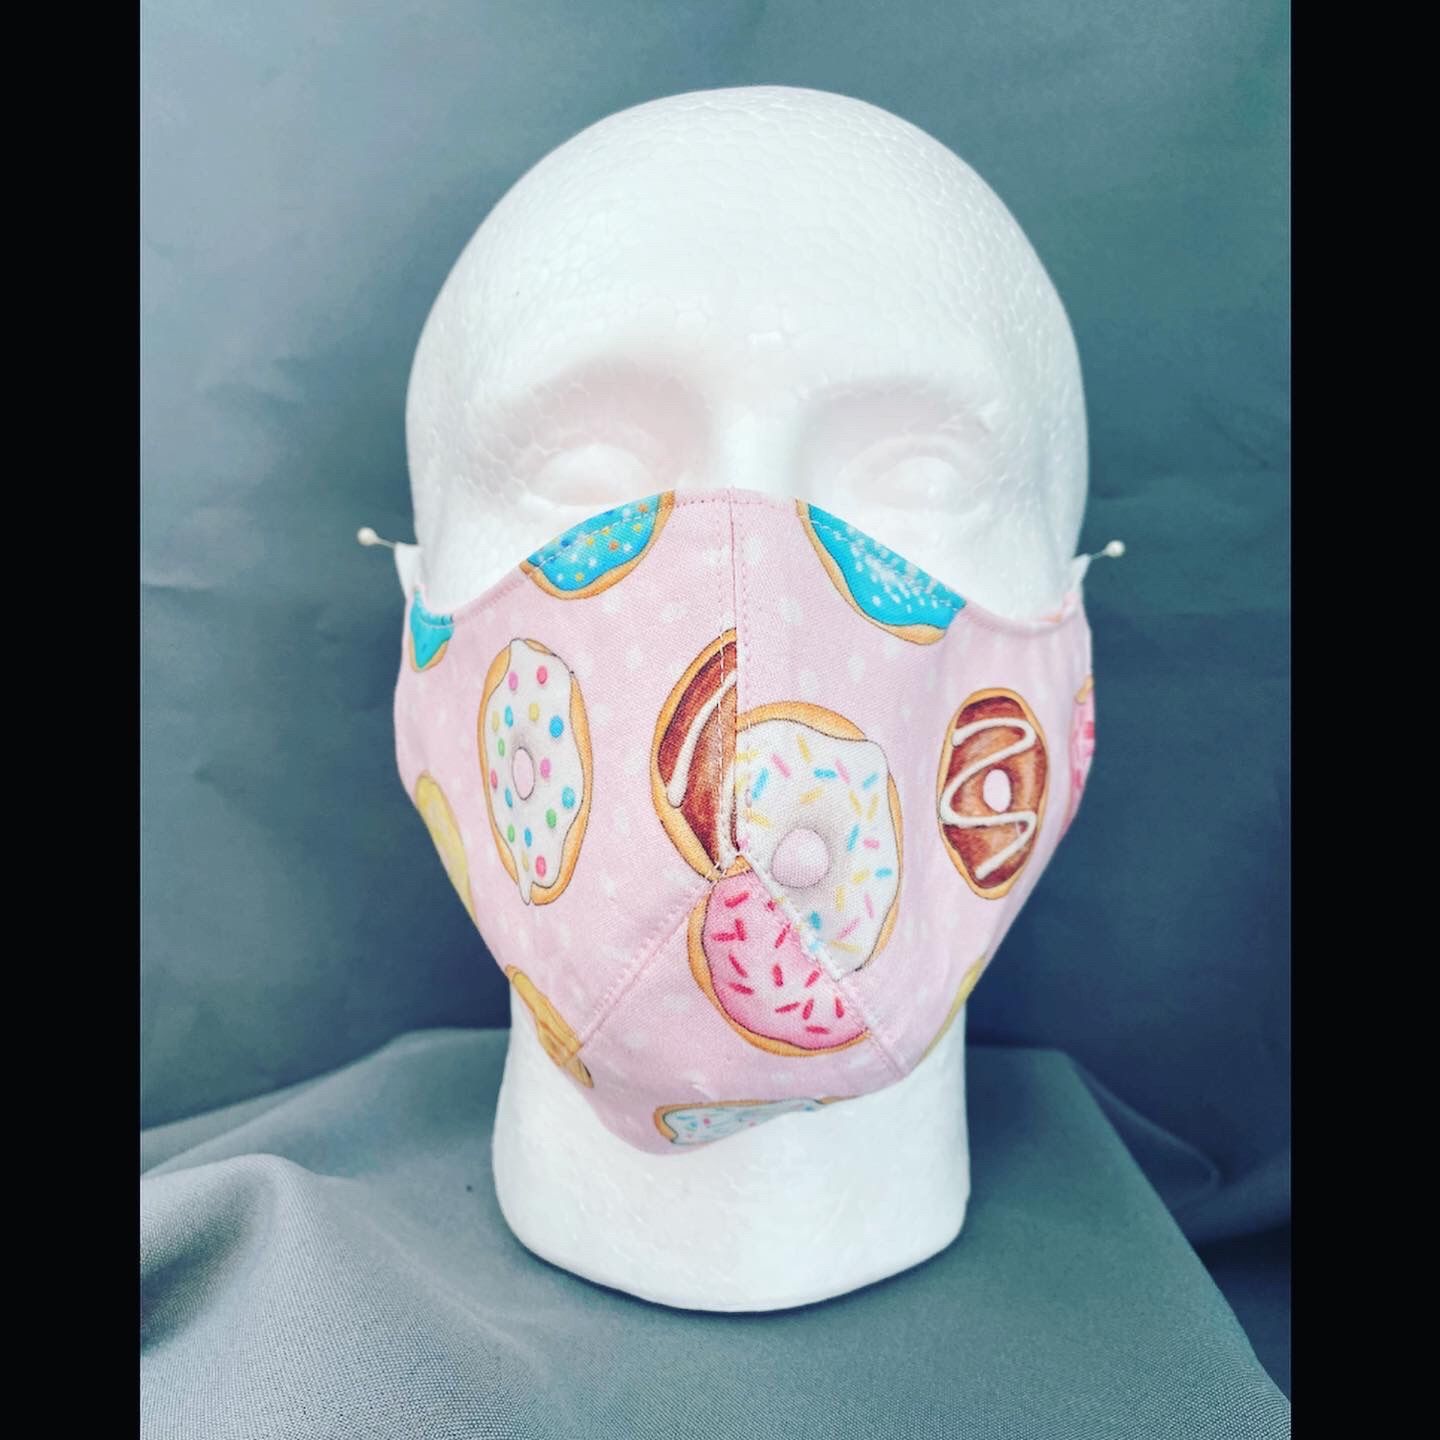 Donut face mask